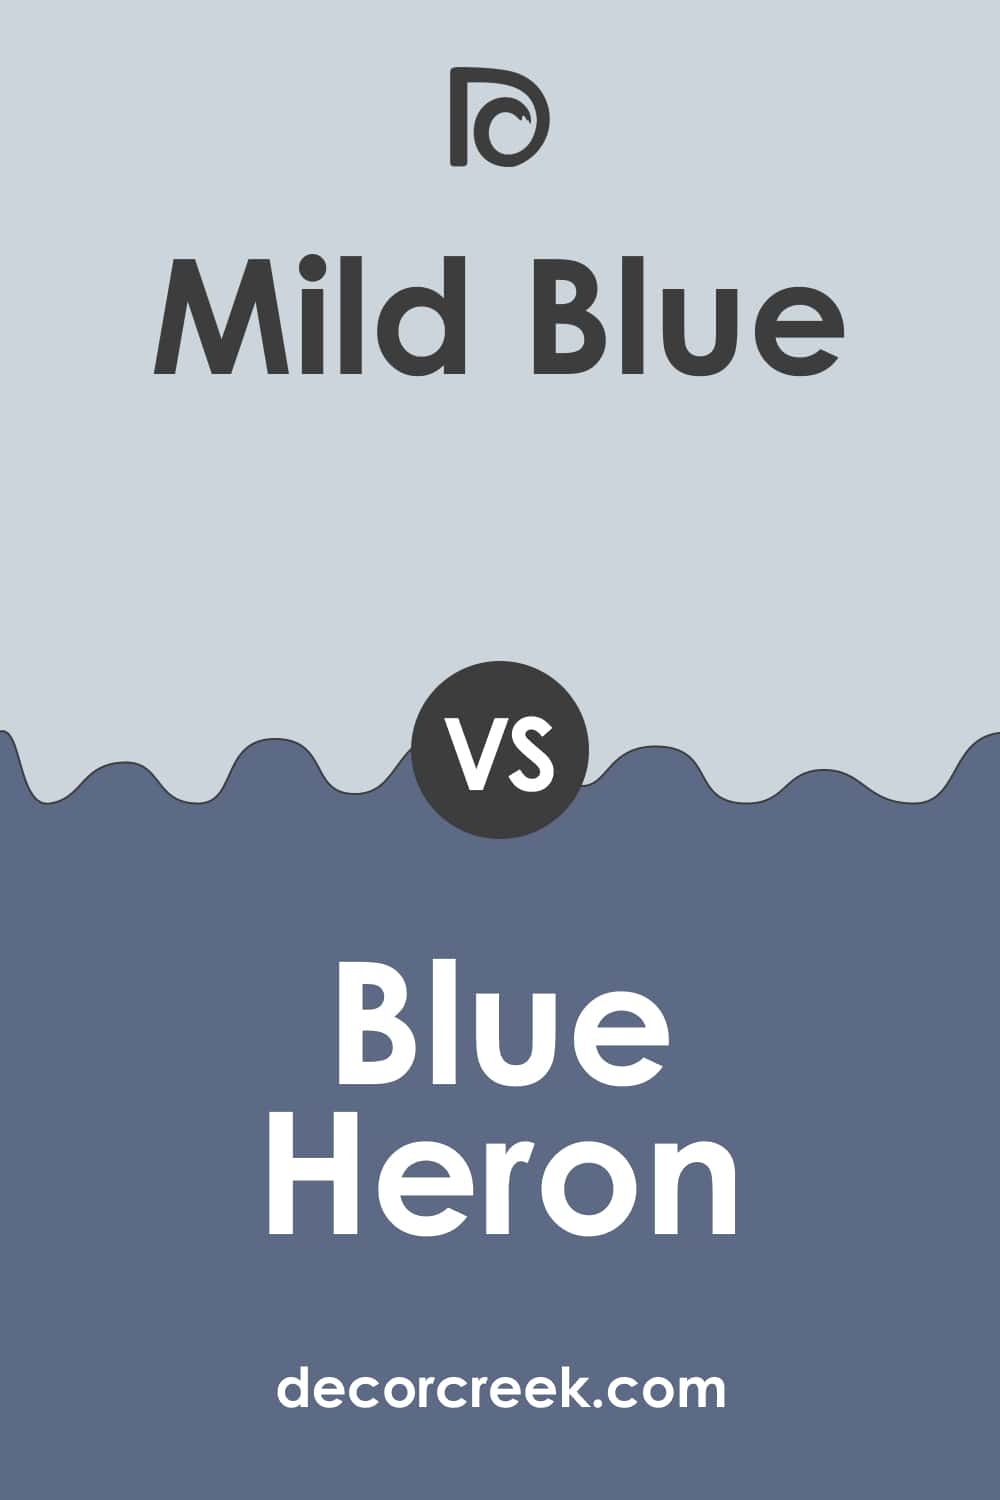 Mild Blue vs. Blue Heron